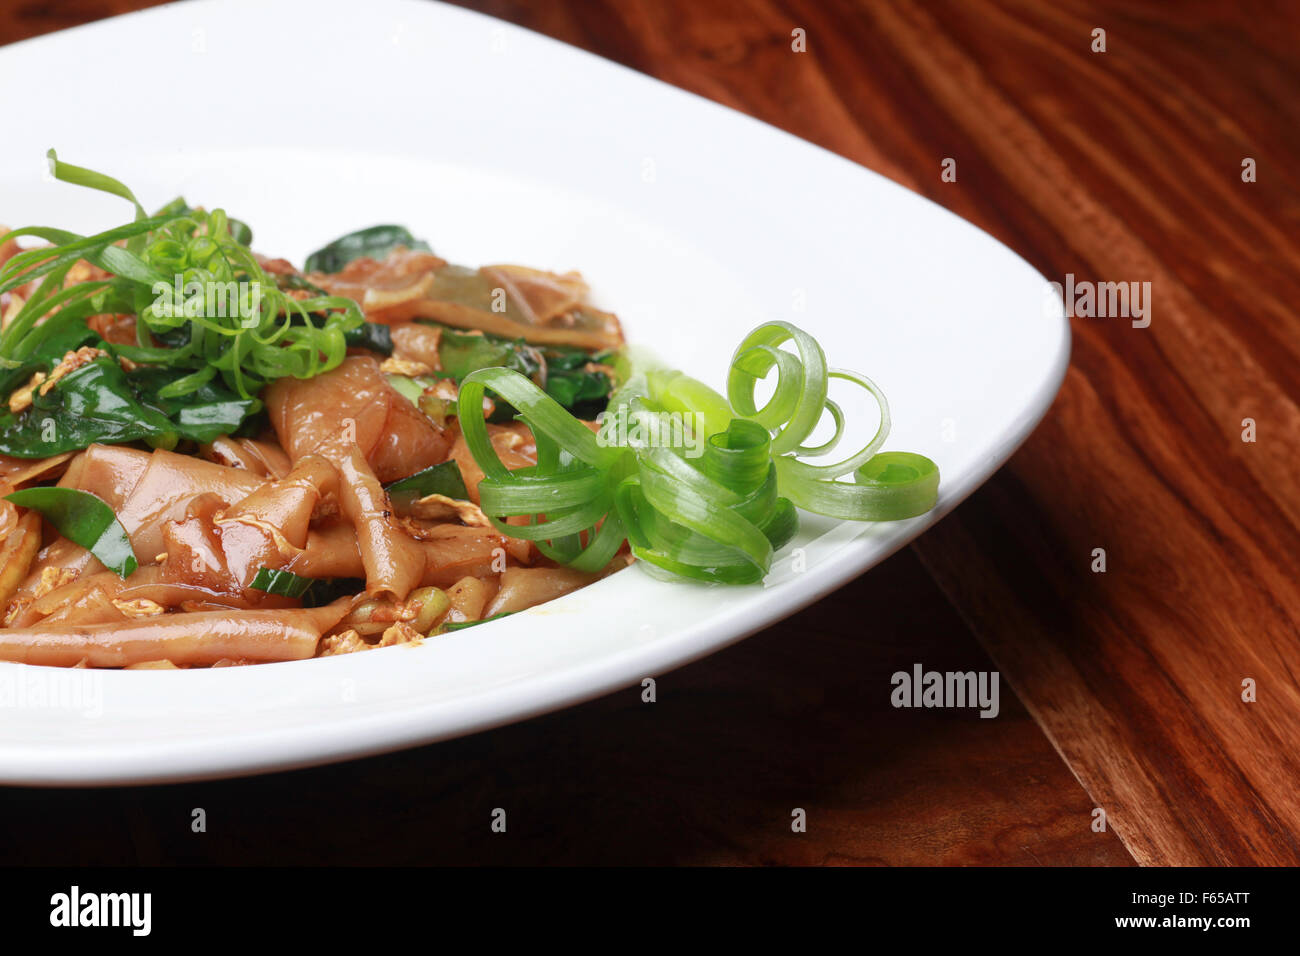 Vegetarian Stir fried noodles garnished with greens Stock Photo